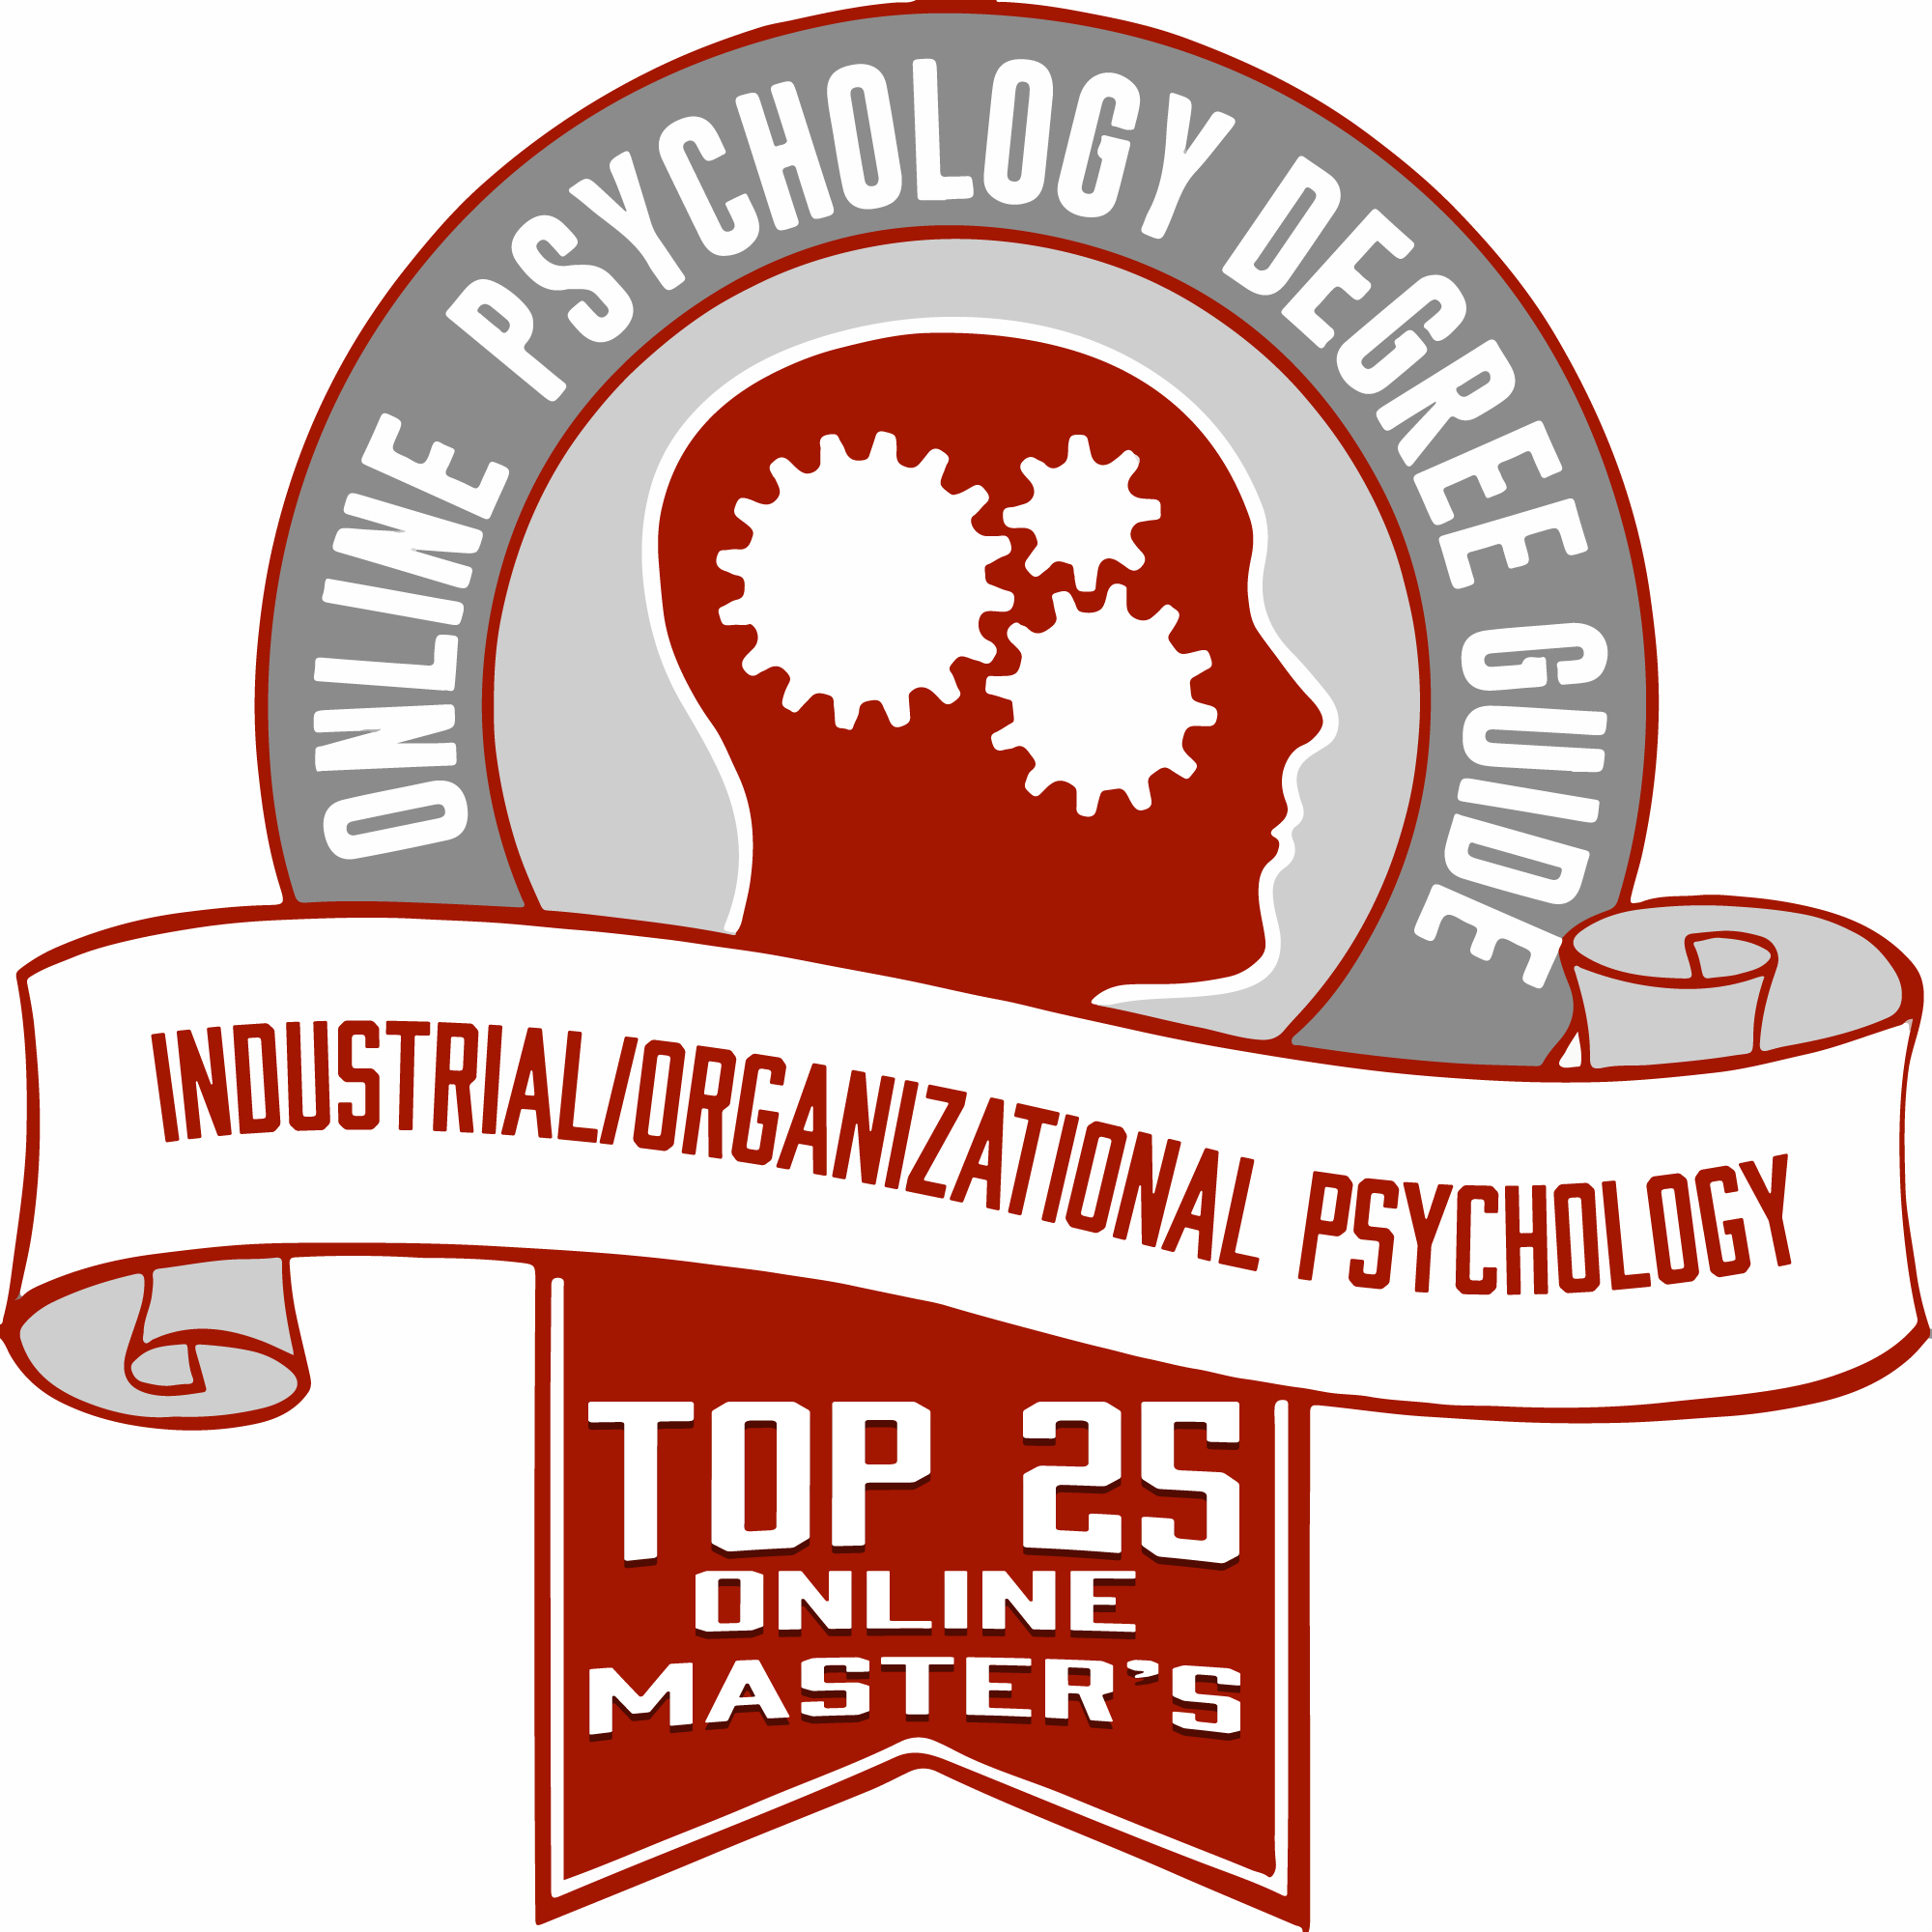 Top 25 Master's in Industrial/Organizational Psychology Online